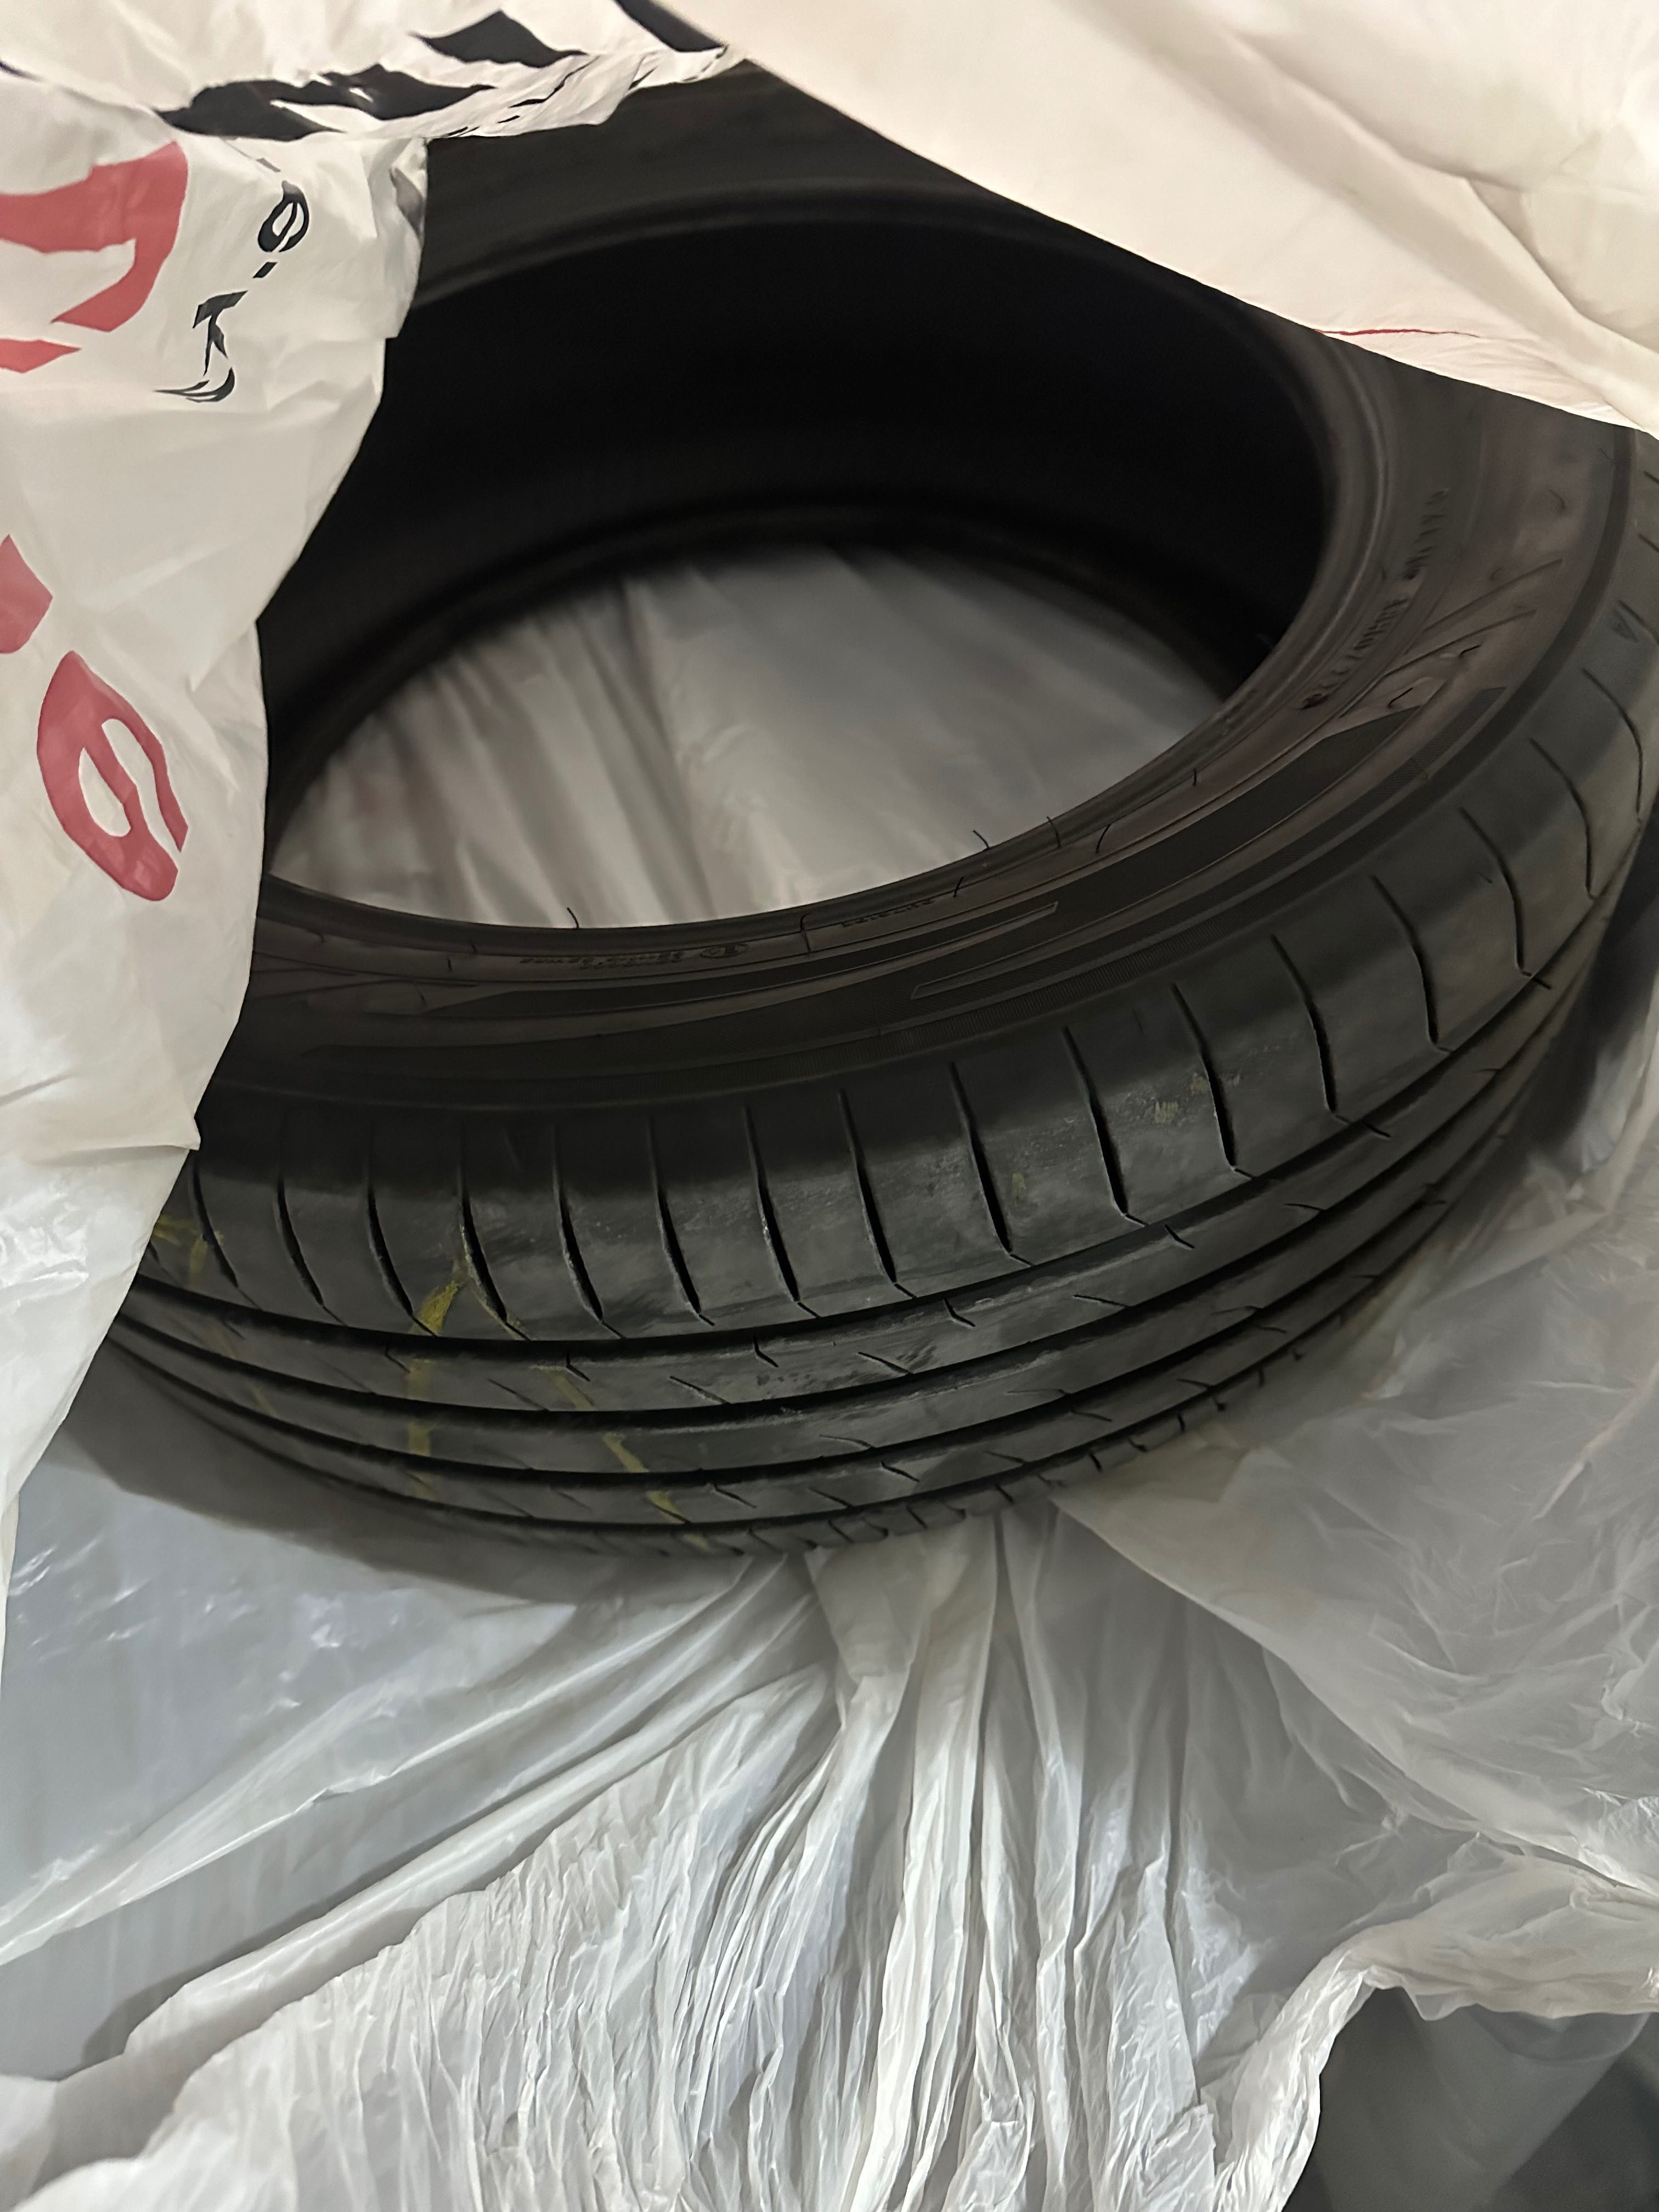 Шины (летние) Toyo tires диаметр - 17 (98w)